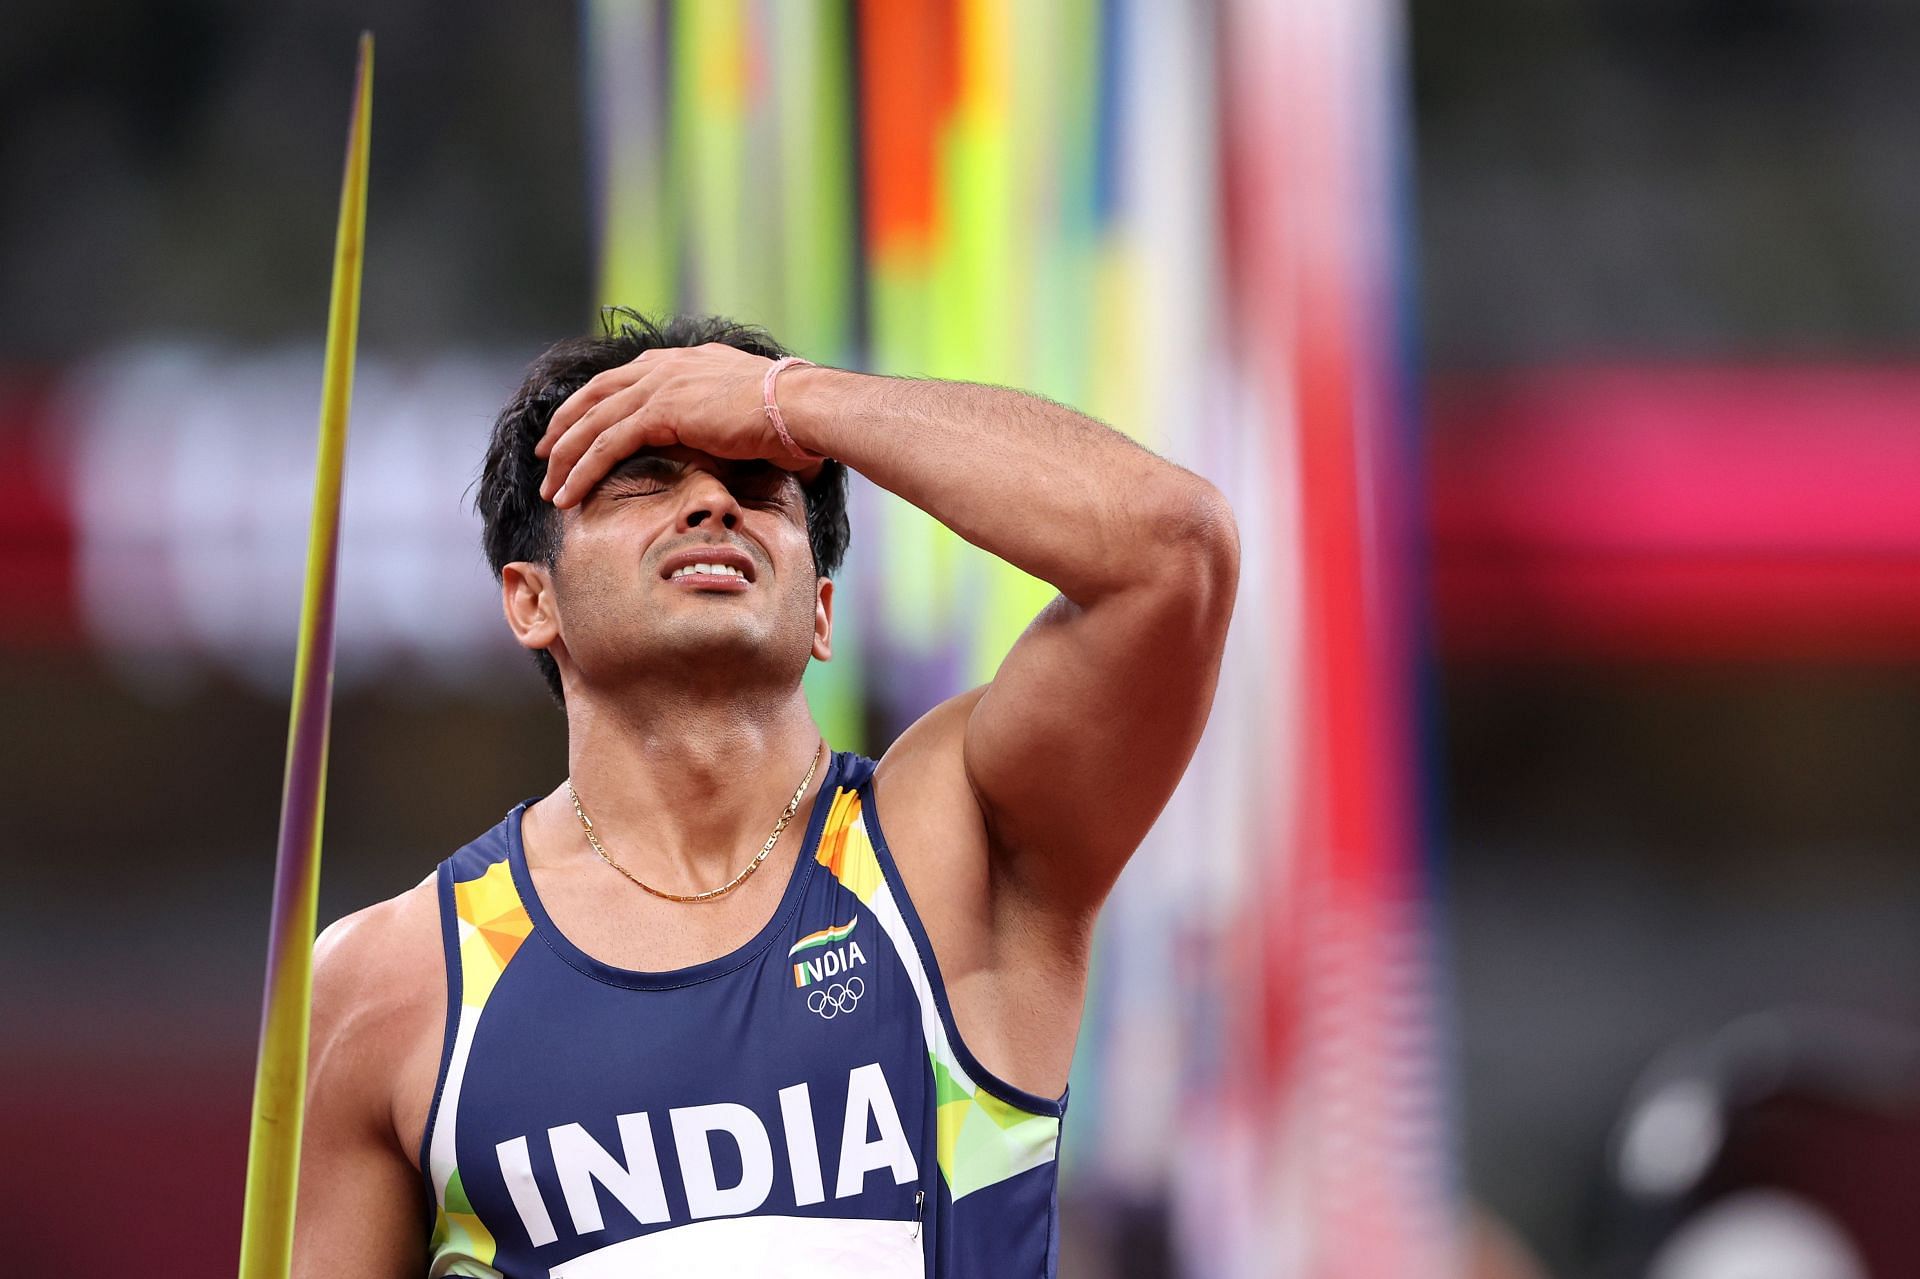 Neeraj Chopra won a silver at the Paavo Nurmi Games